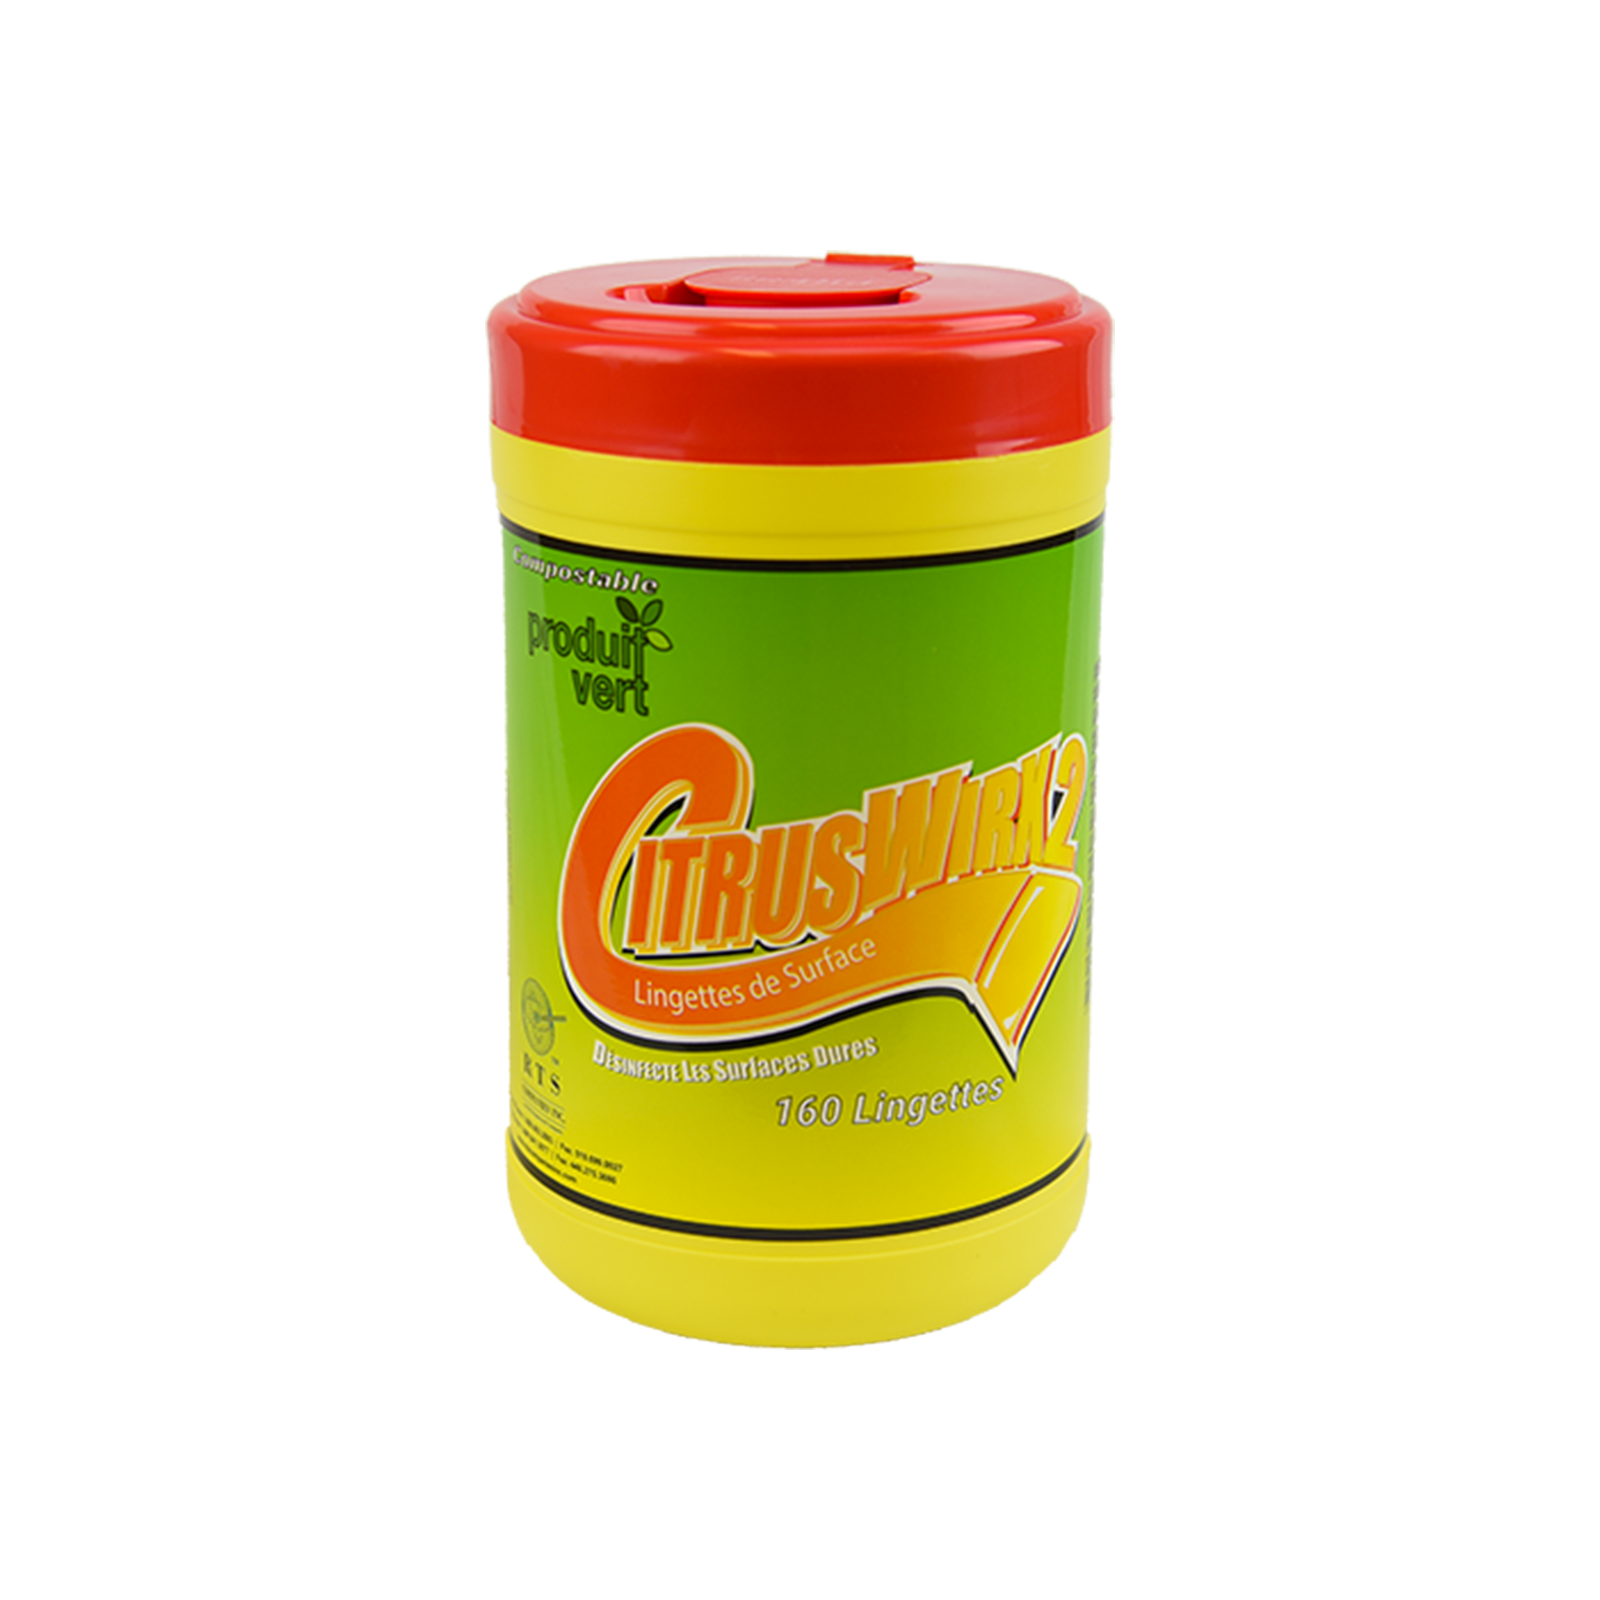 CitrusWirx 160 Wipe Canister